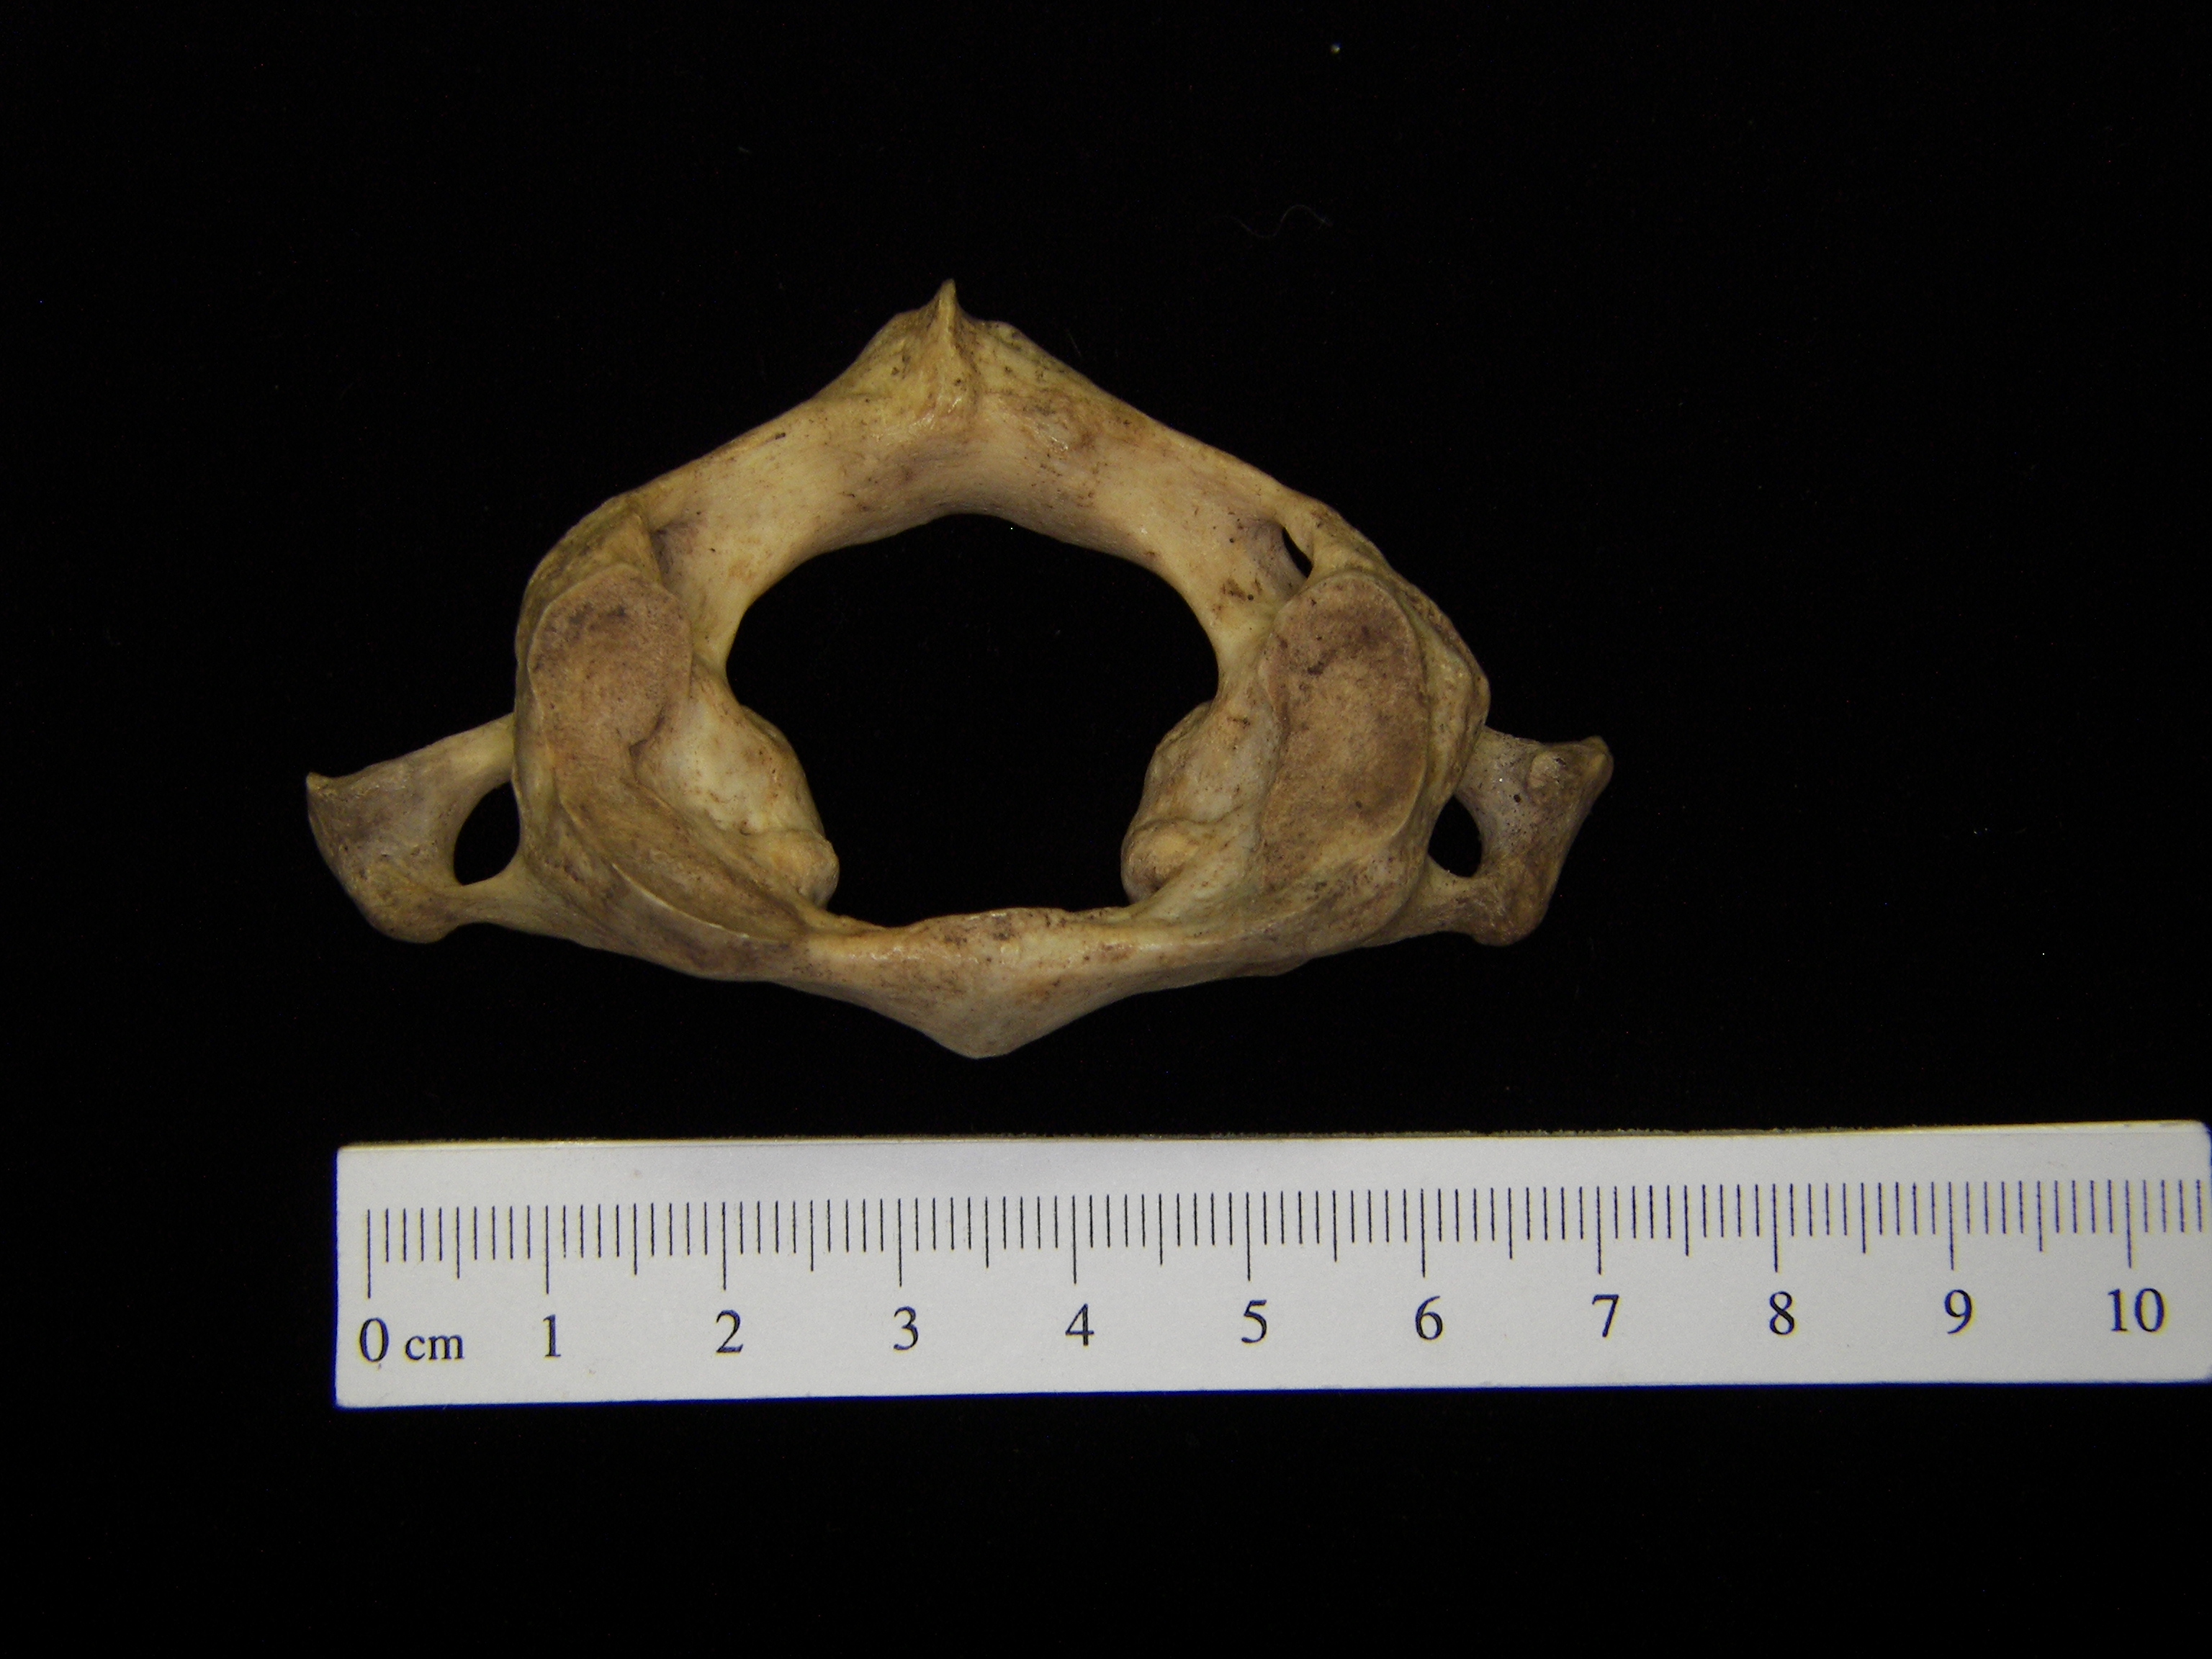 Human C1 (1st cervical vertebra), superior view